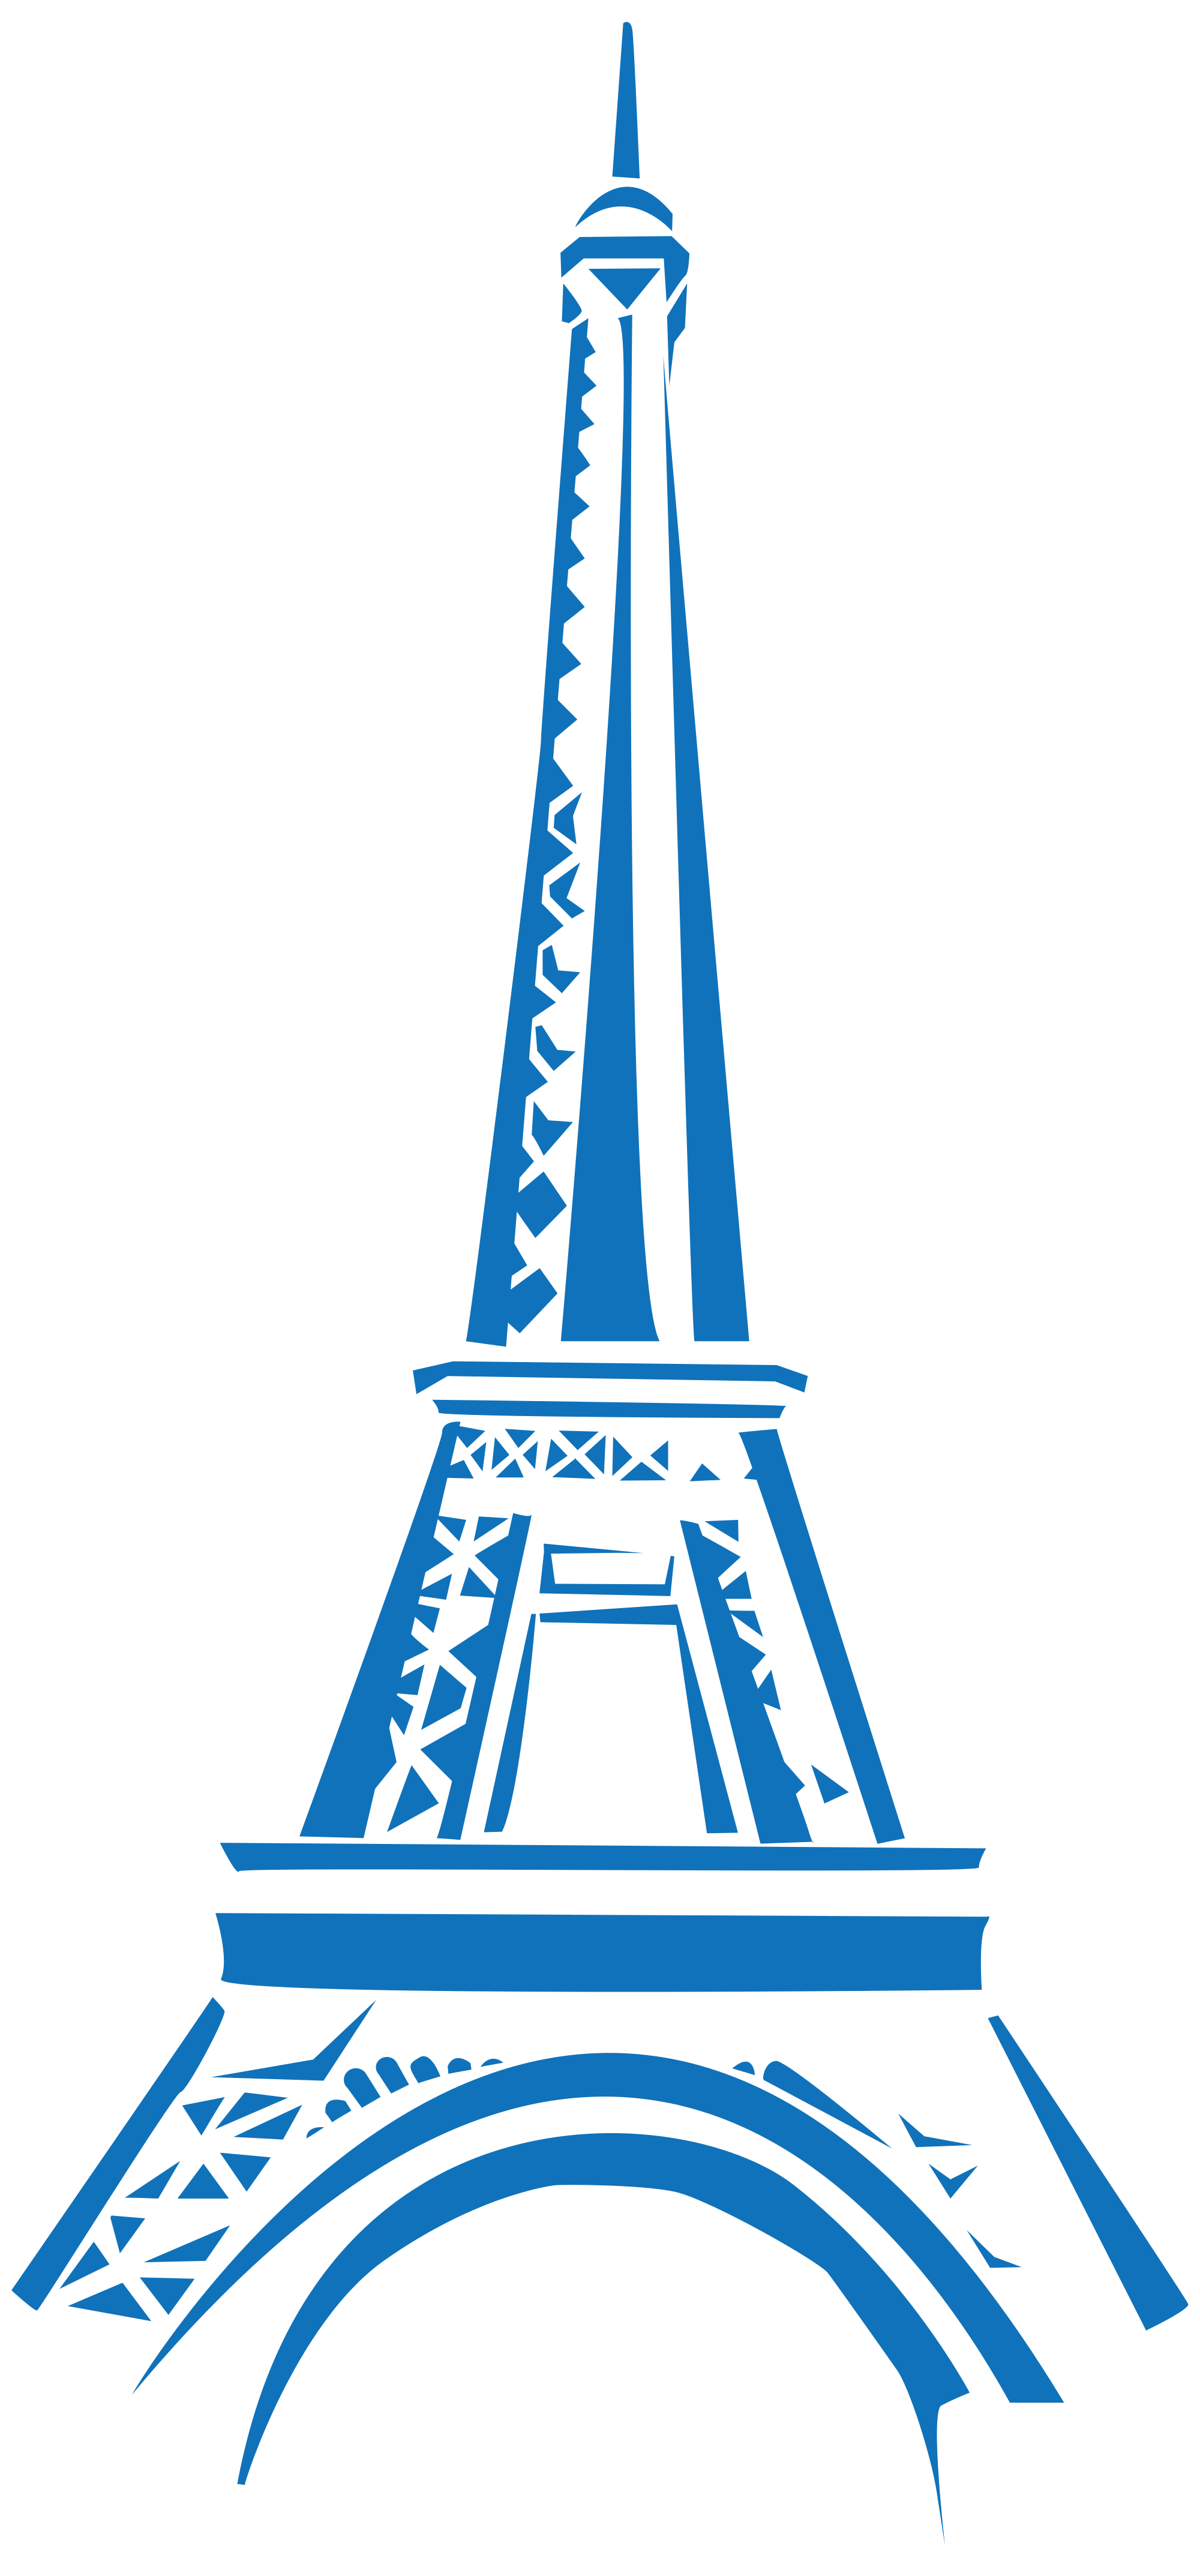 Menara Eiffel